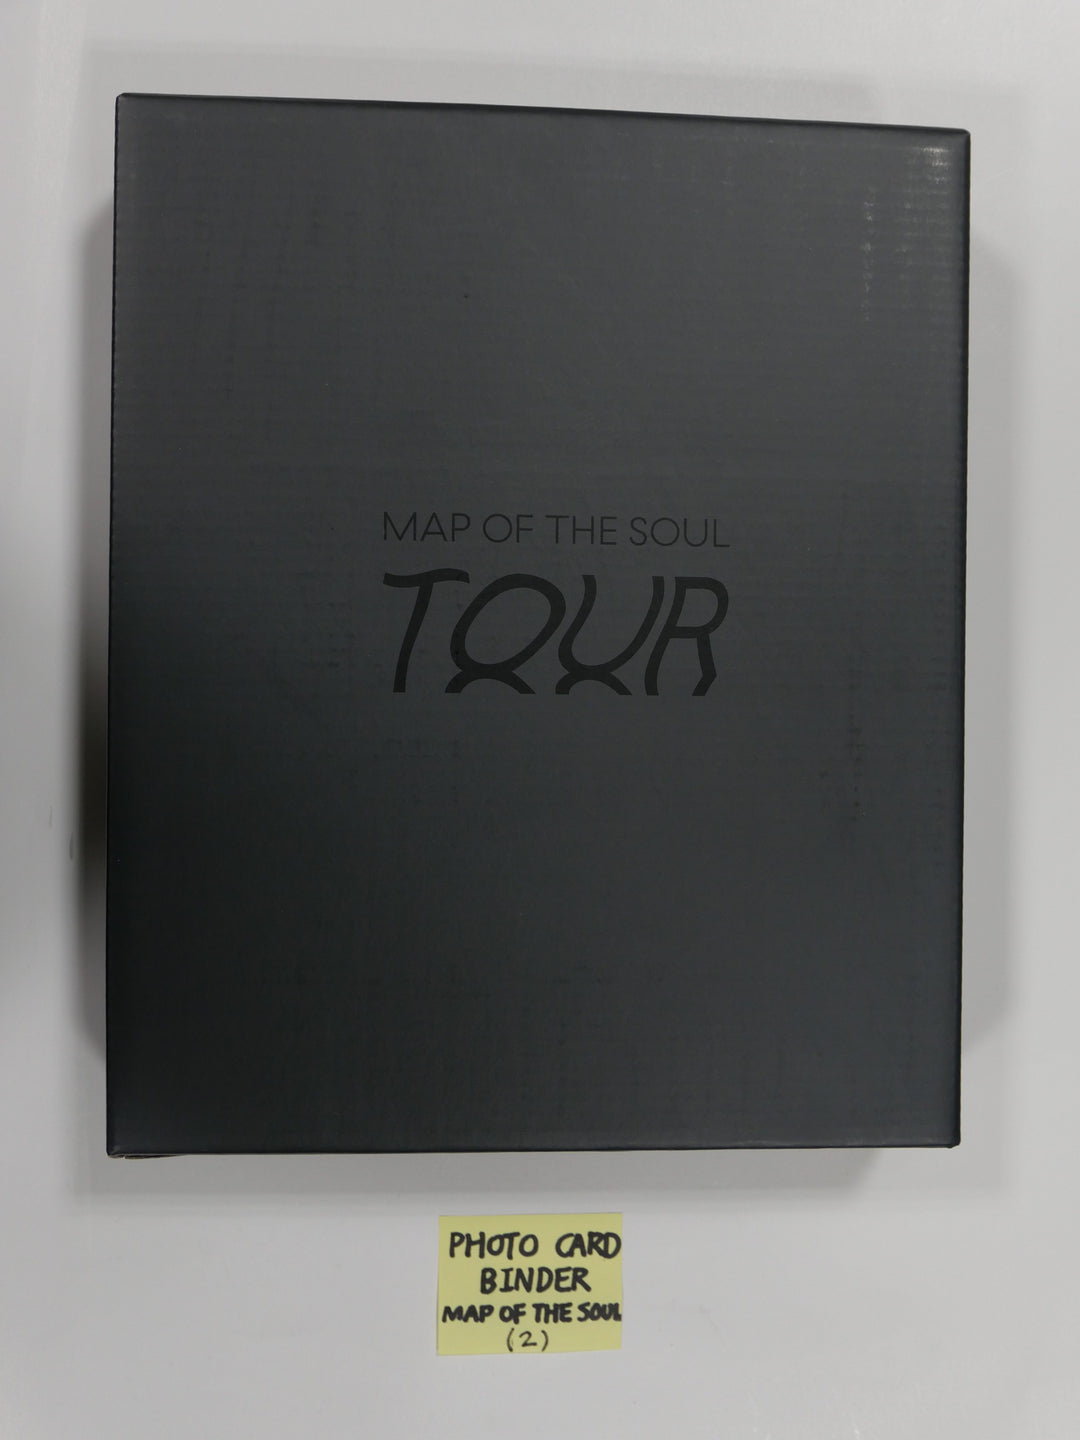 BTS Map Of the Soul  - Official Keyring, Photo Card Binder